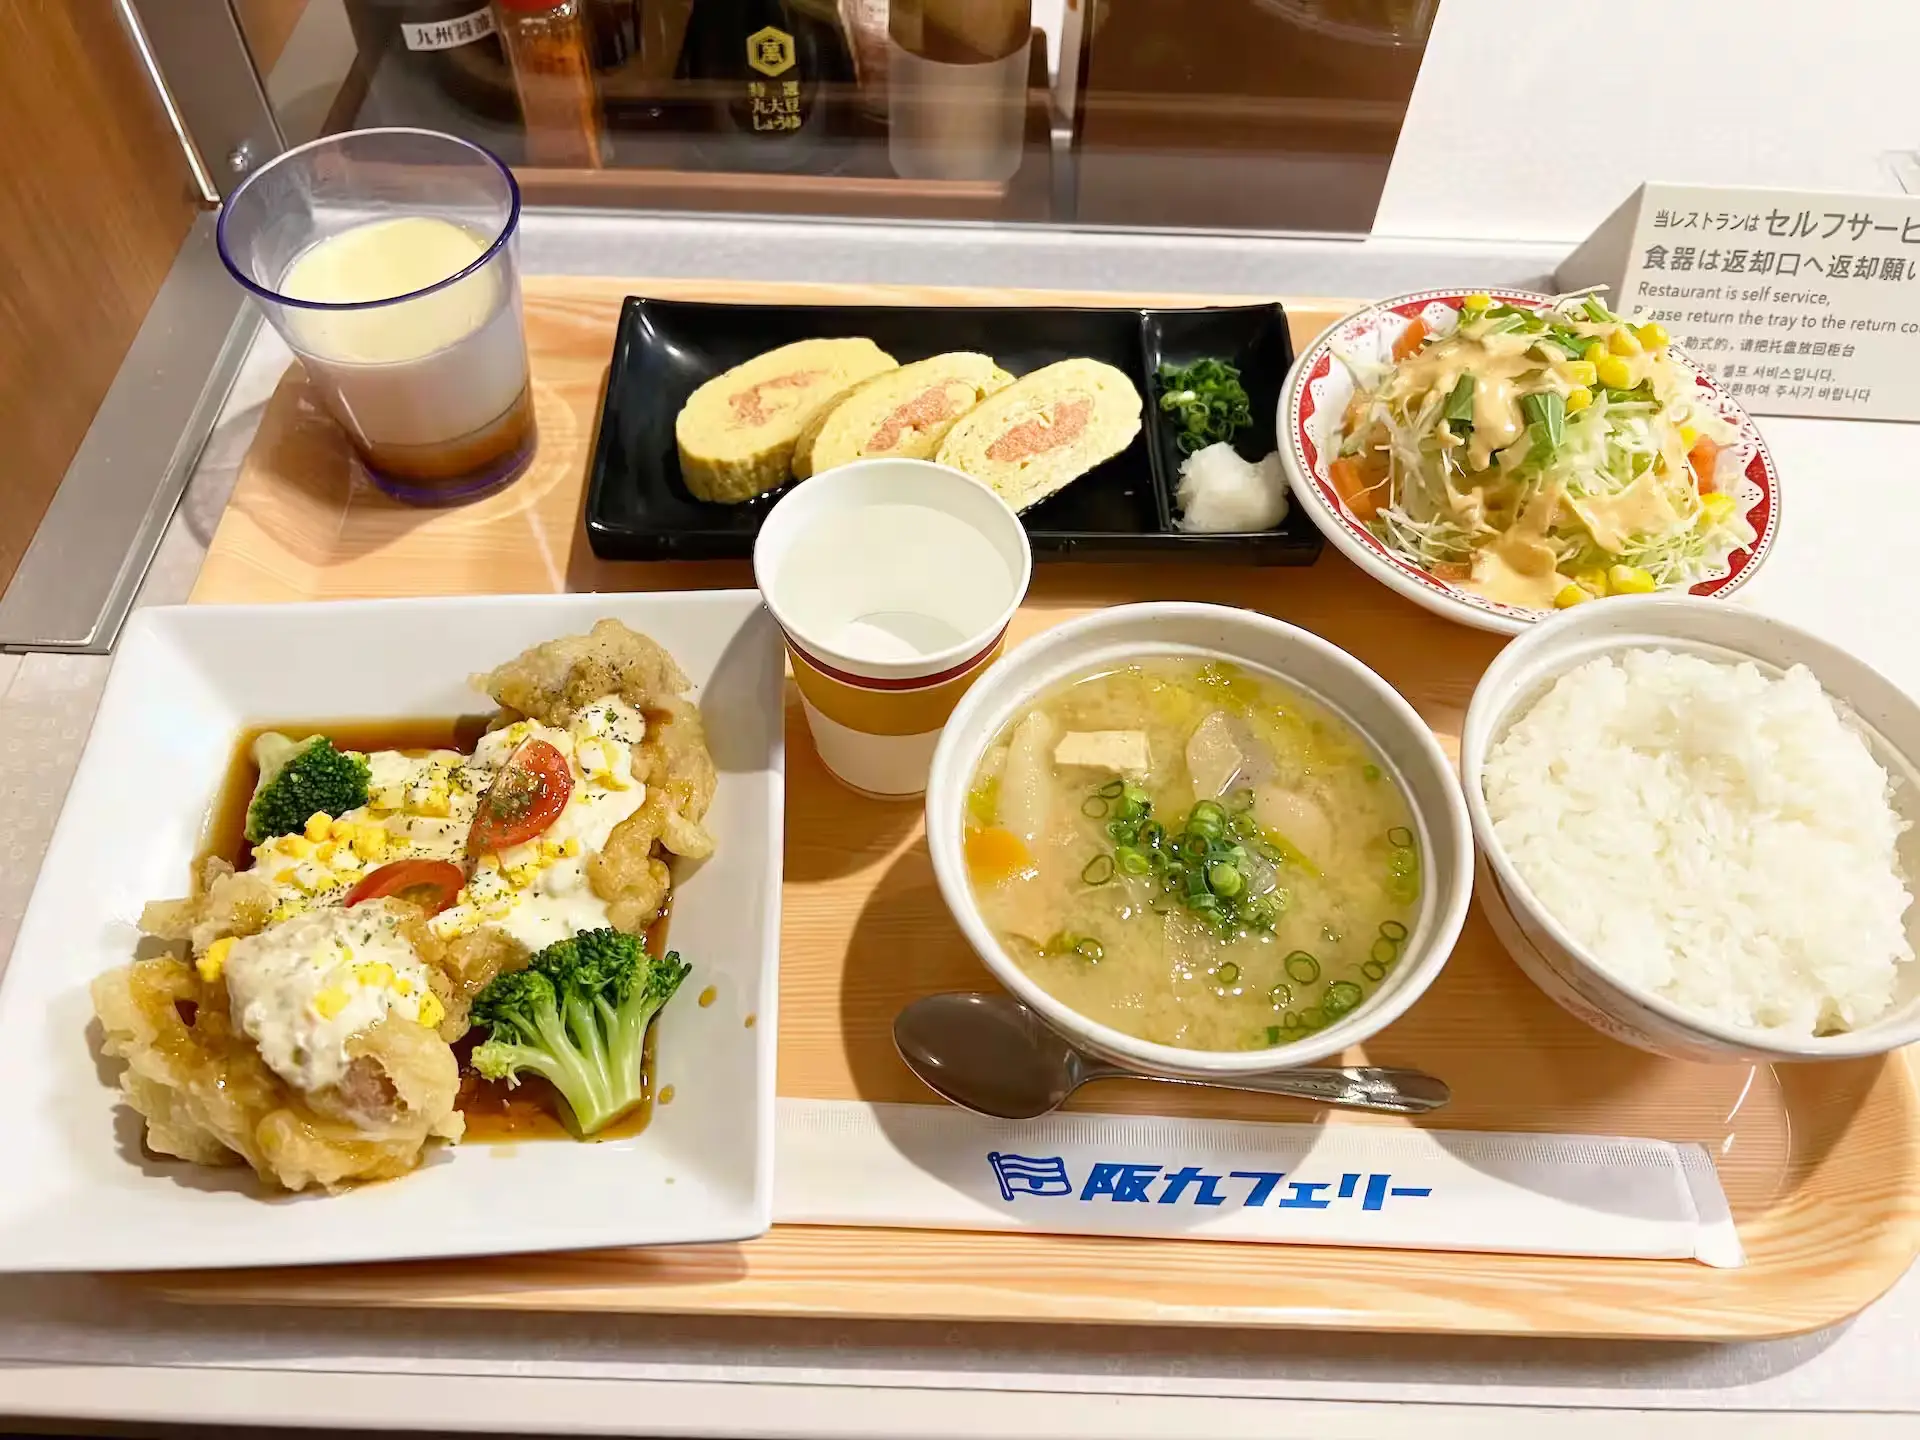 Plate of dinner offerings at the Hankyu Ferry Yamato Restaurant